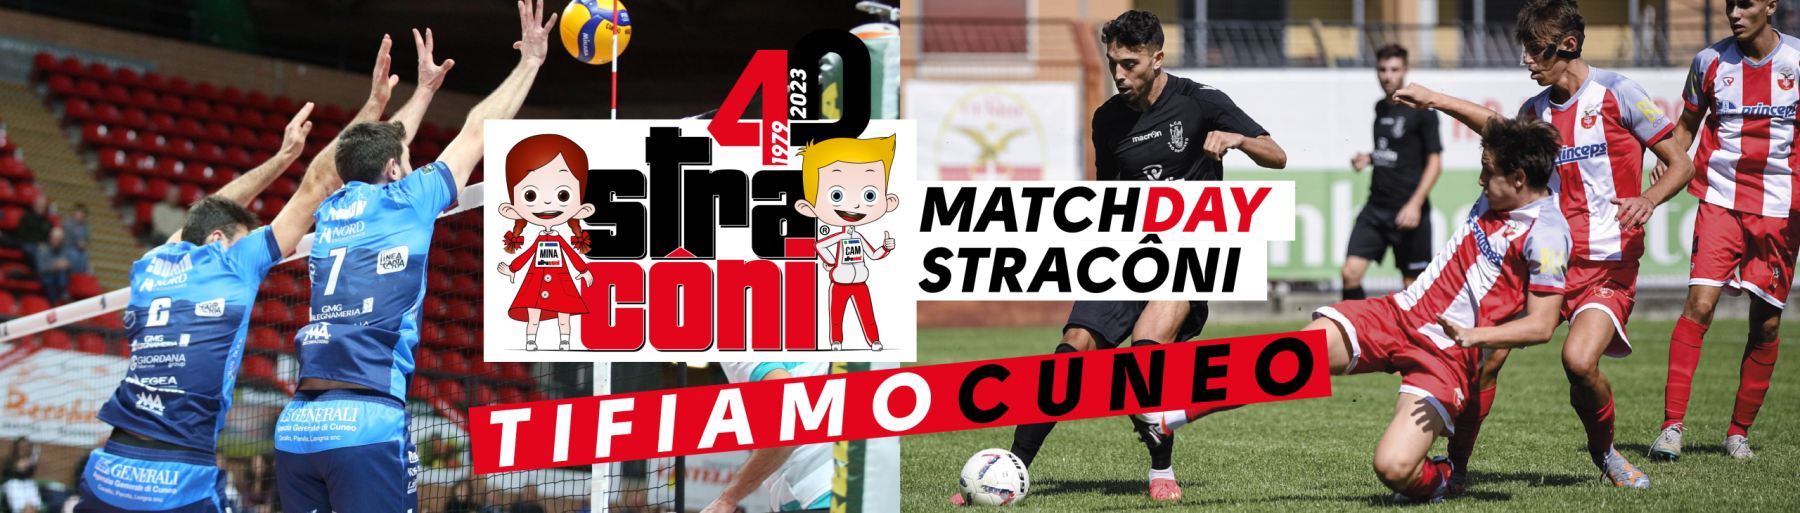 Tifiamo Cuneo - Match Day Stracôni